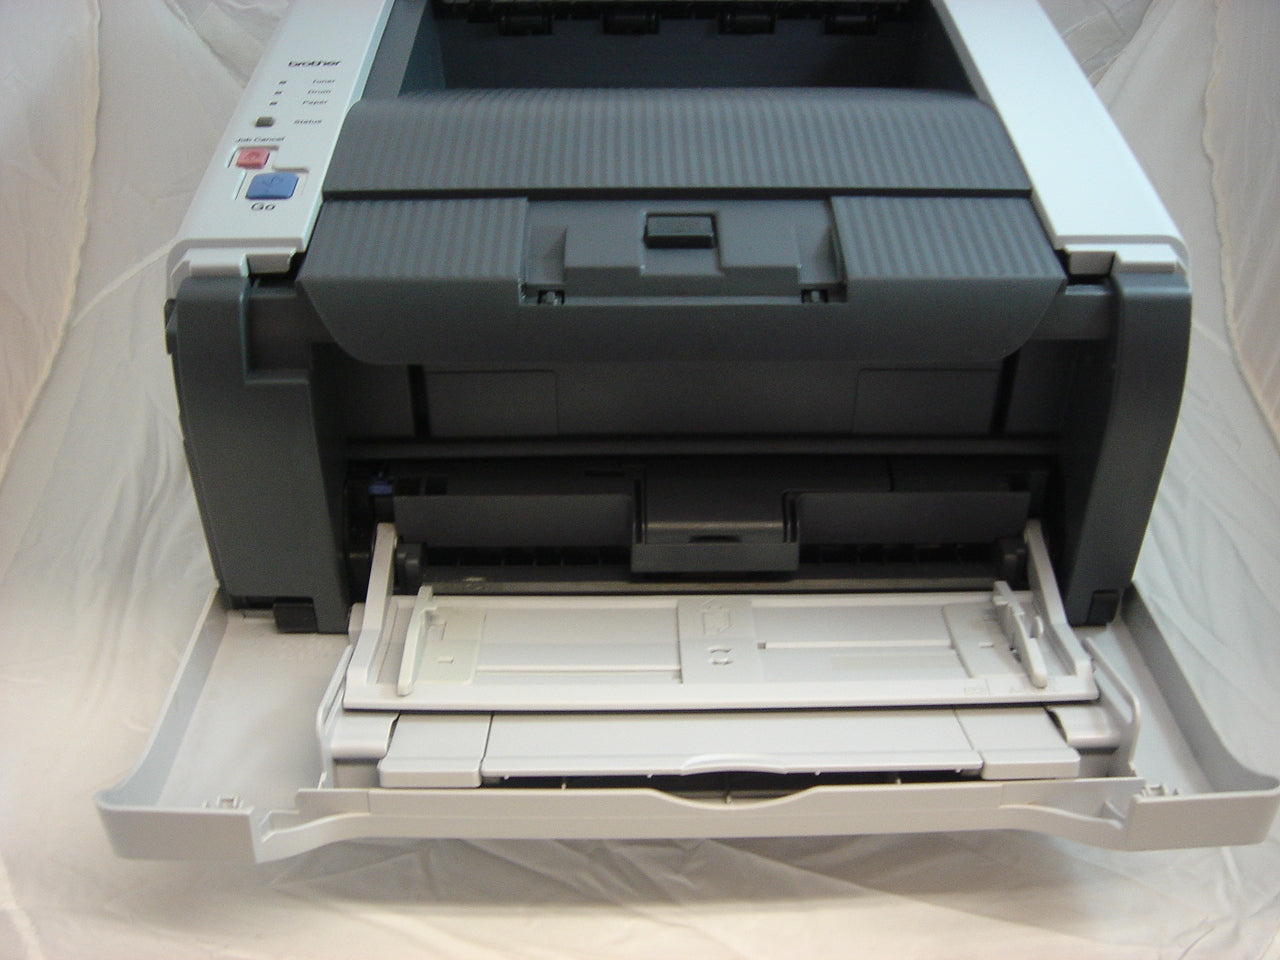 MC3732_HL-5250DN_Brother HL-5250DN Duplex Laser Printer - Image4